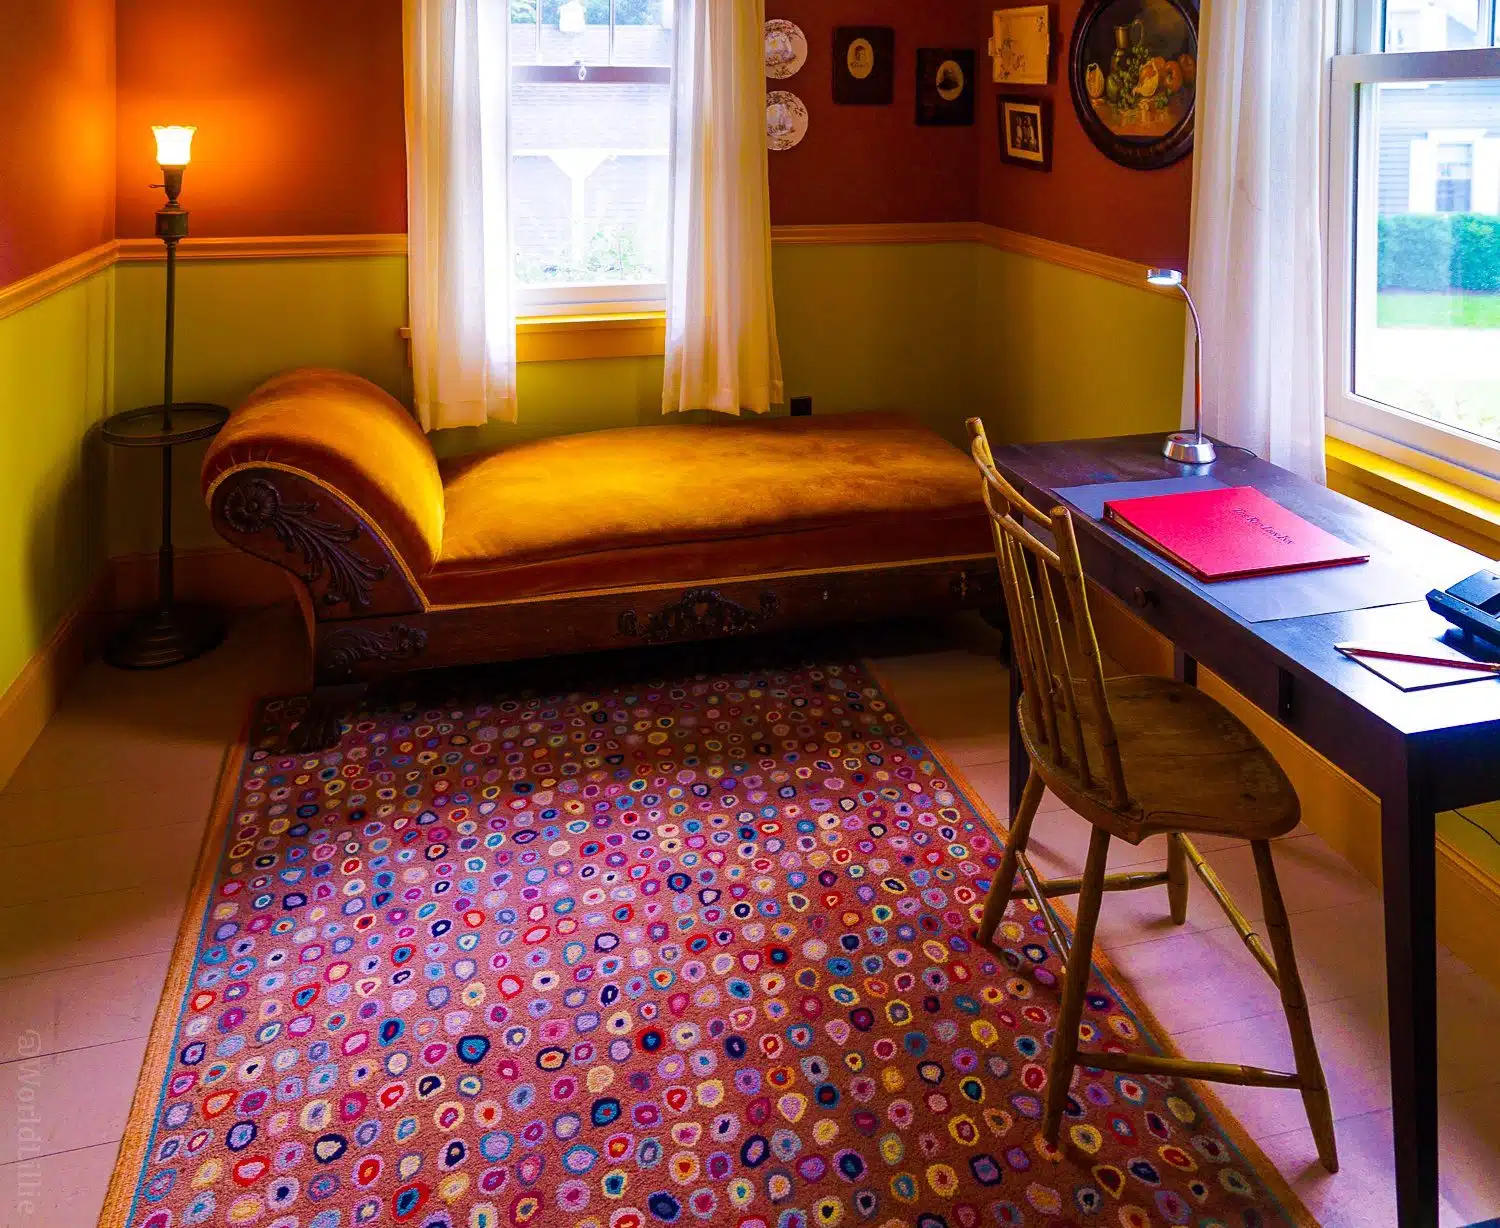 Modern hotel carpets and divan sofa at the Red Lion Inn